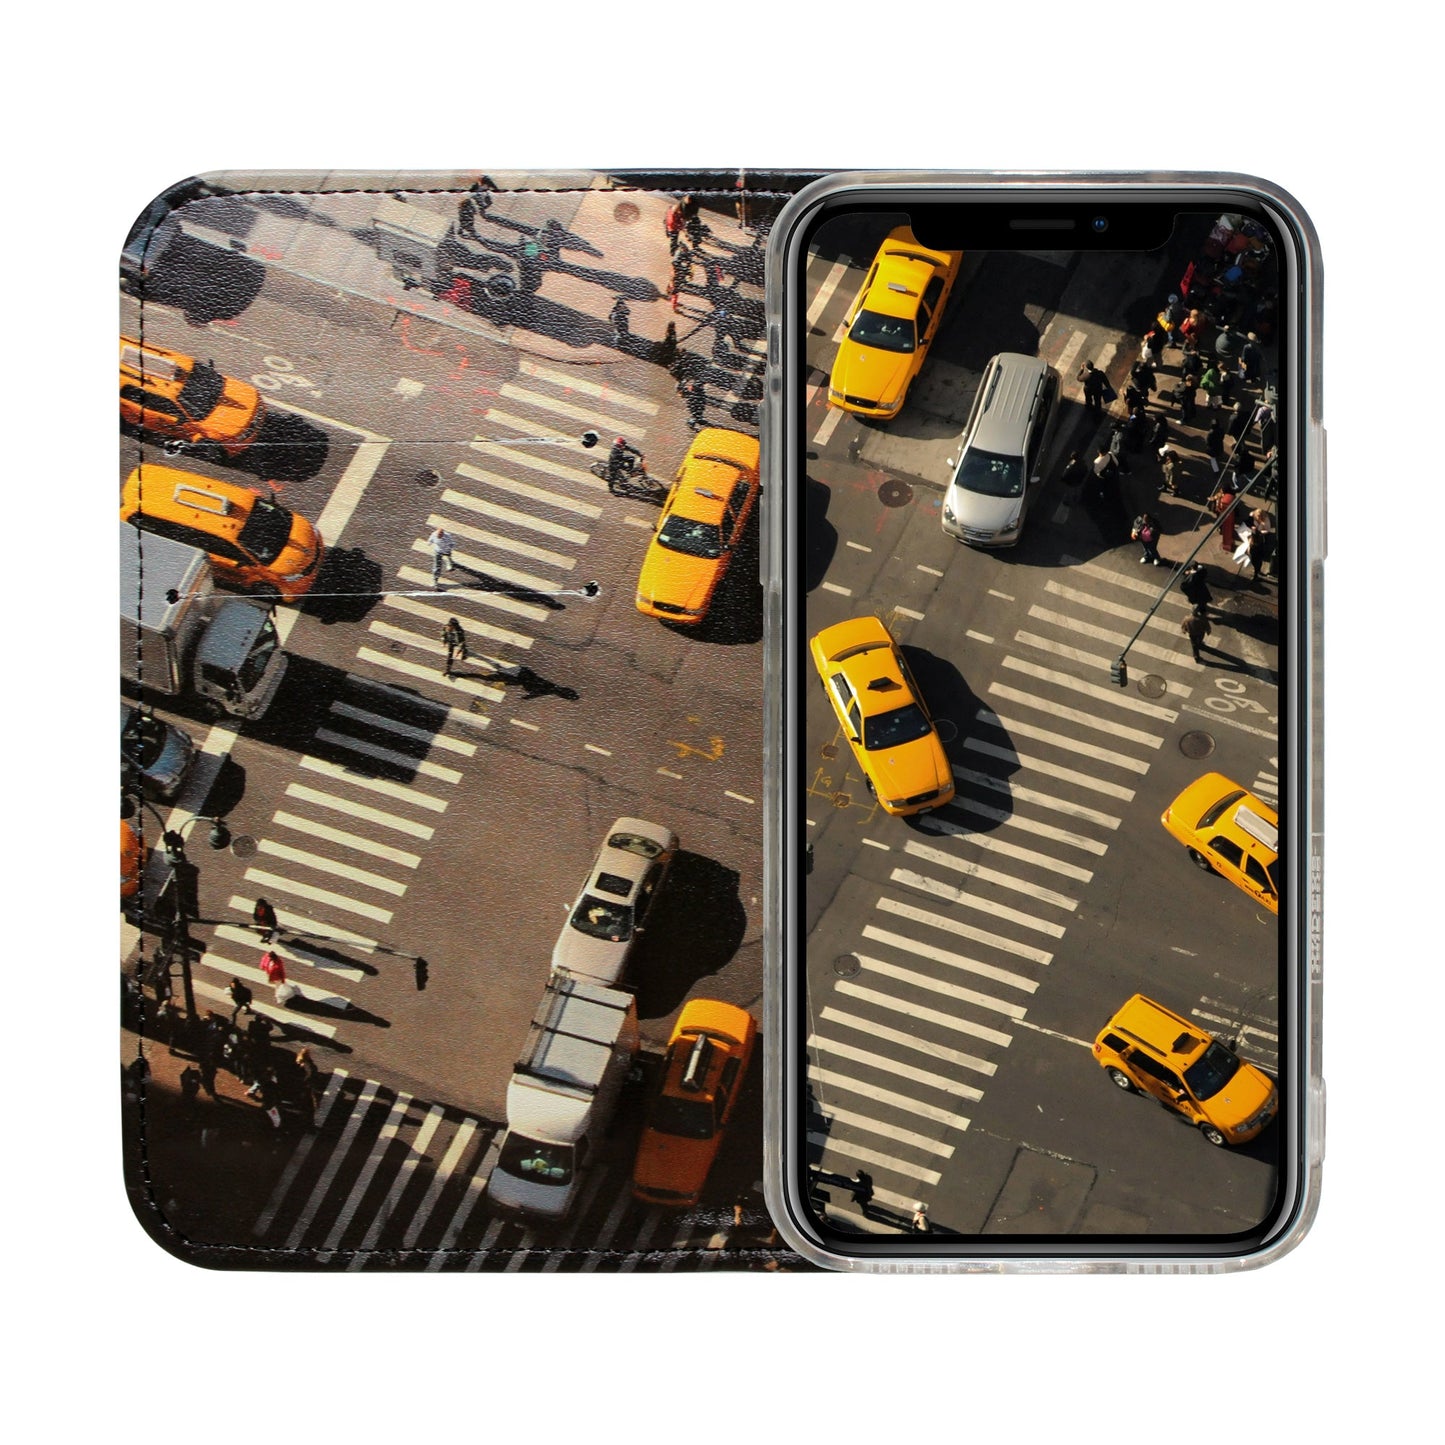 New York City Panorama Case für iPhone X/XS